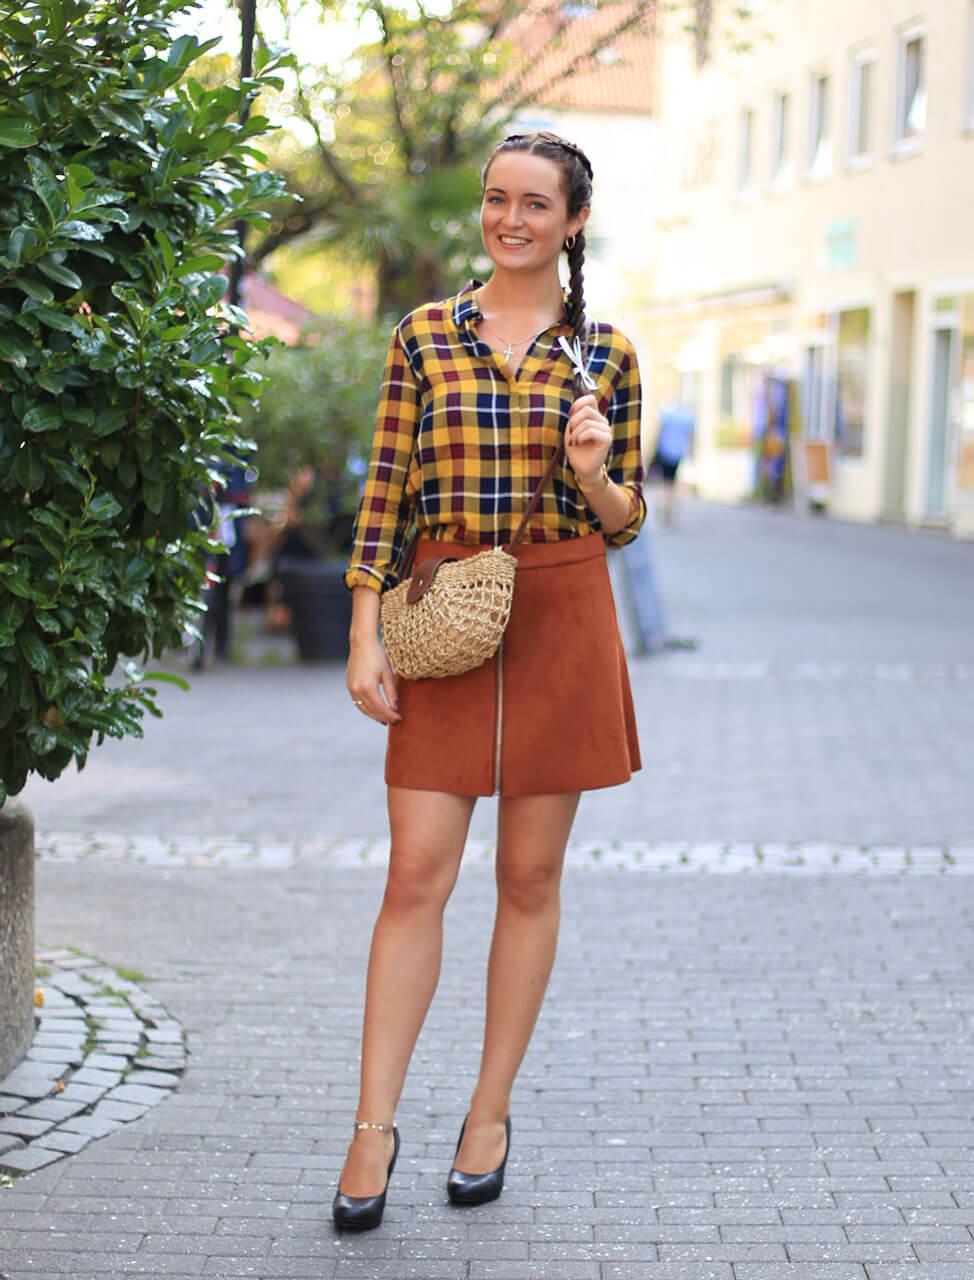 Oktoberfest outfit for women without a dirndl | GALA.de 